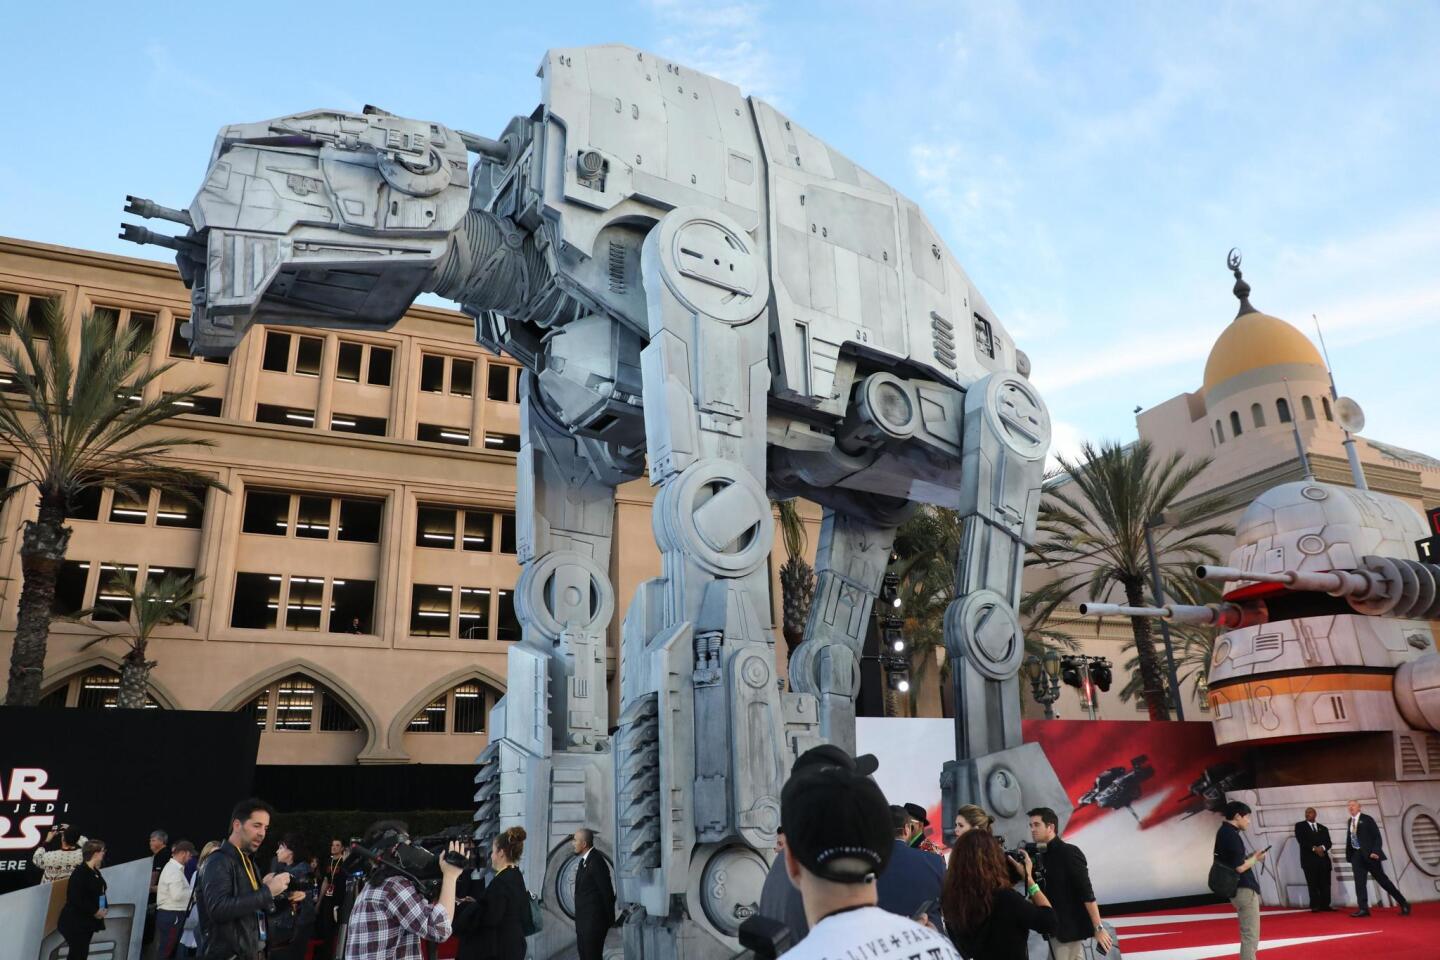 Star Wars: The Last Jedi world premiere red carpet in Los Angeles